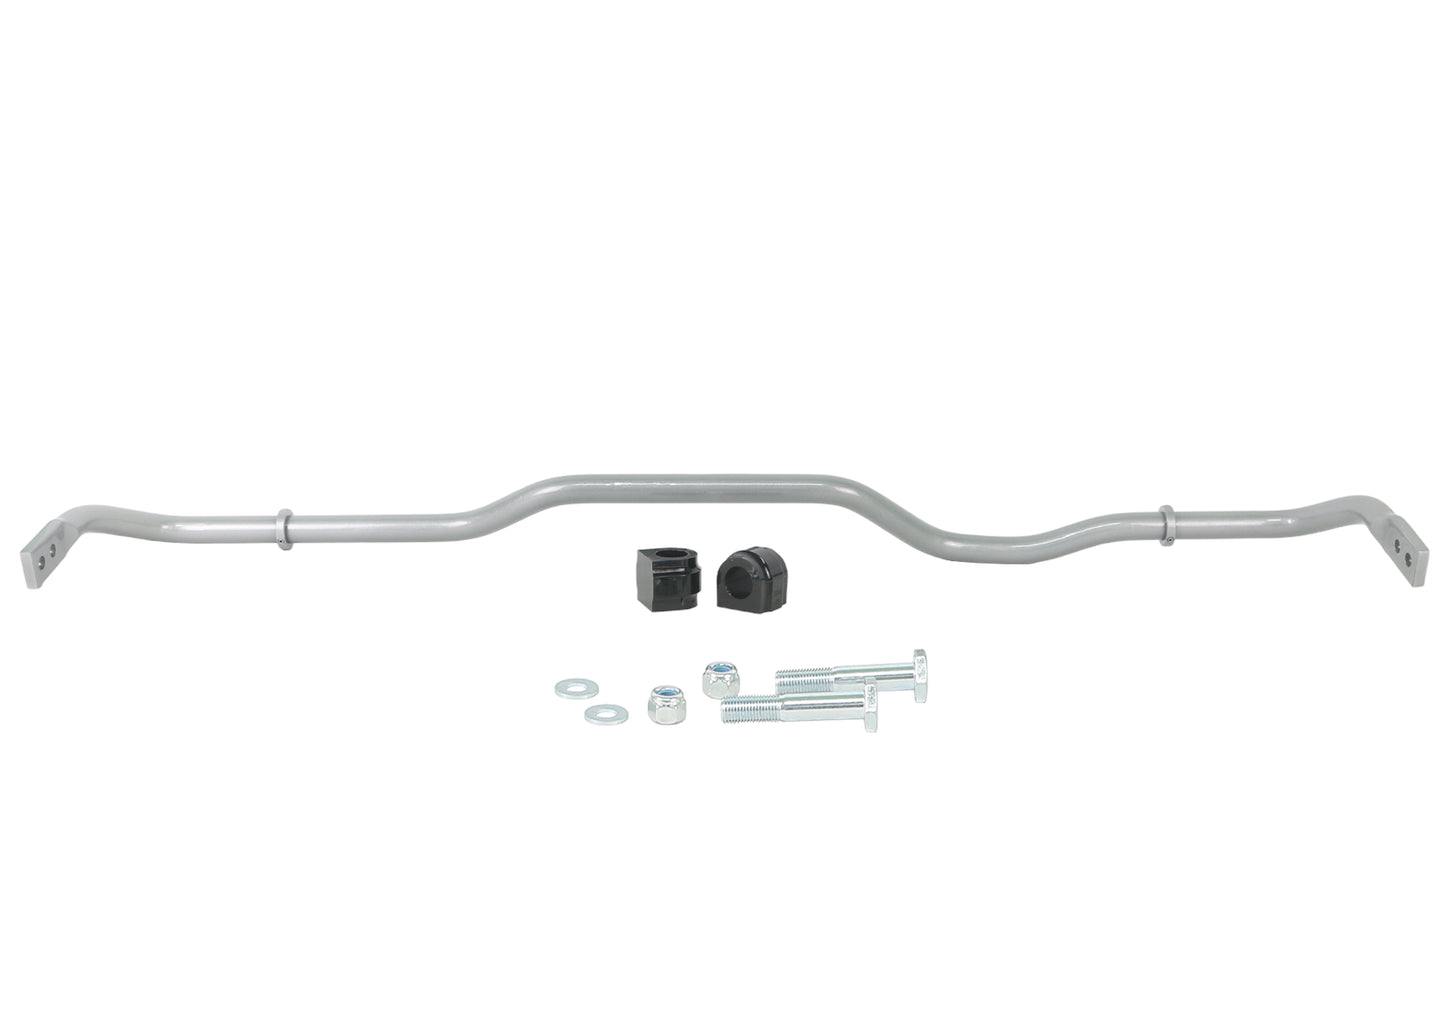 Whiteline Rear Anti Roll Bar 24mm 2-Point Adjustable for Audi S3 8P (07-12)